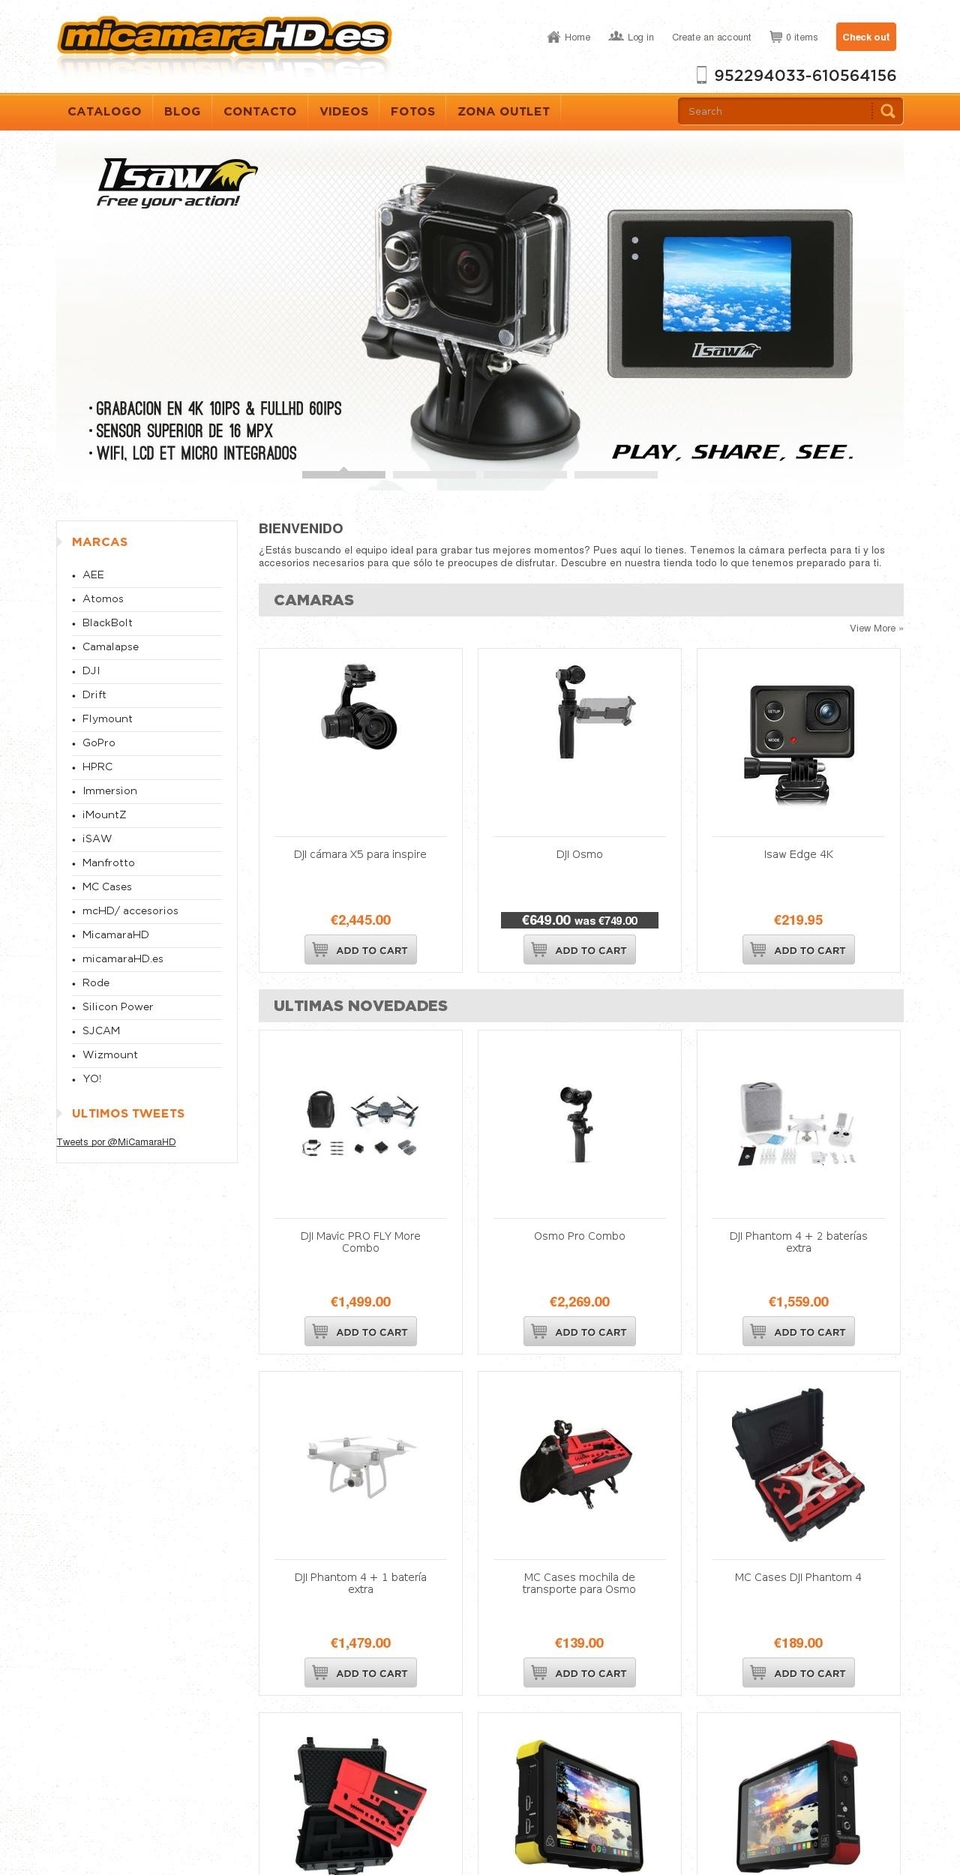 micamarahd.es shopify website screenshot